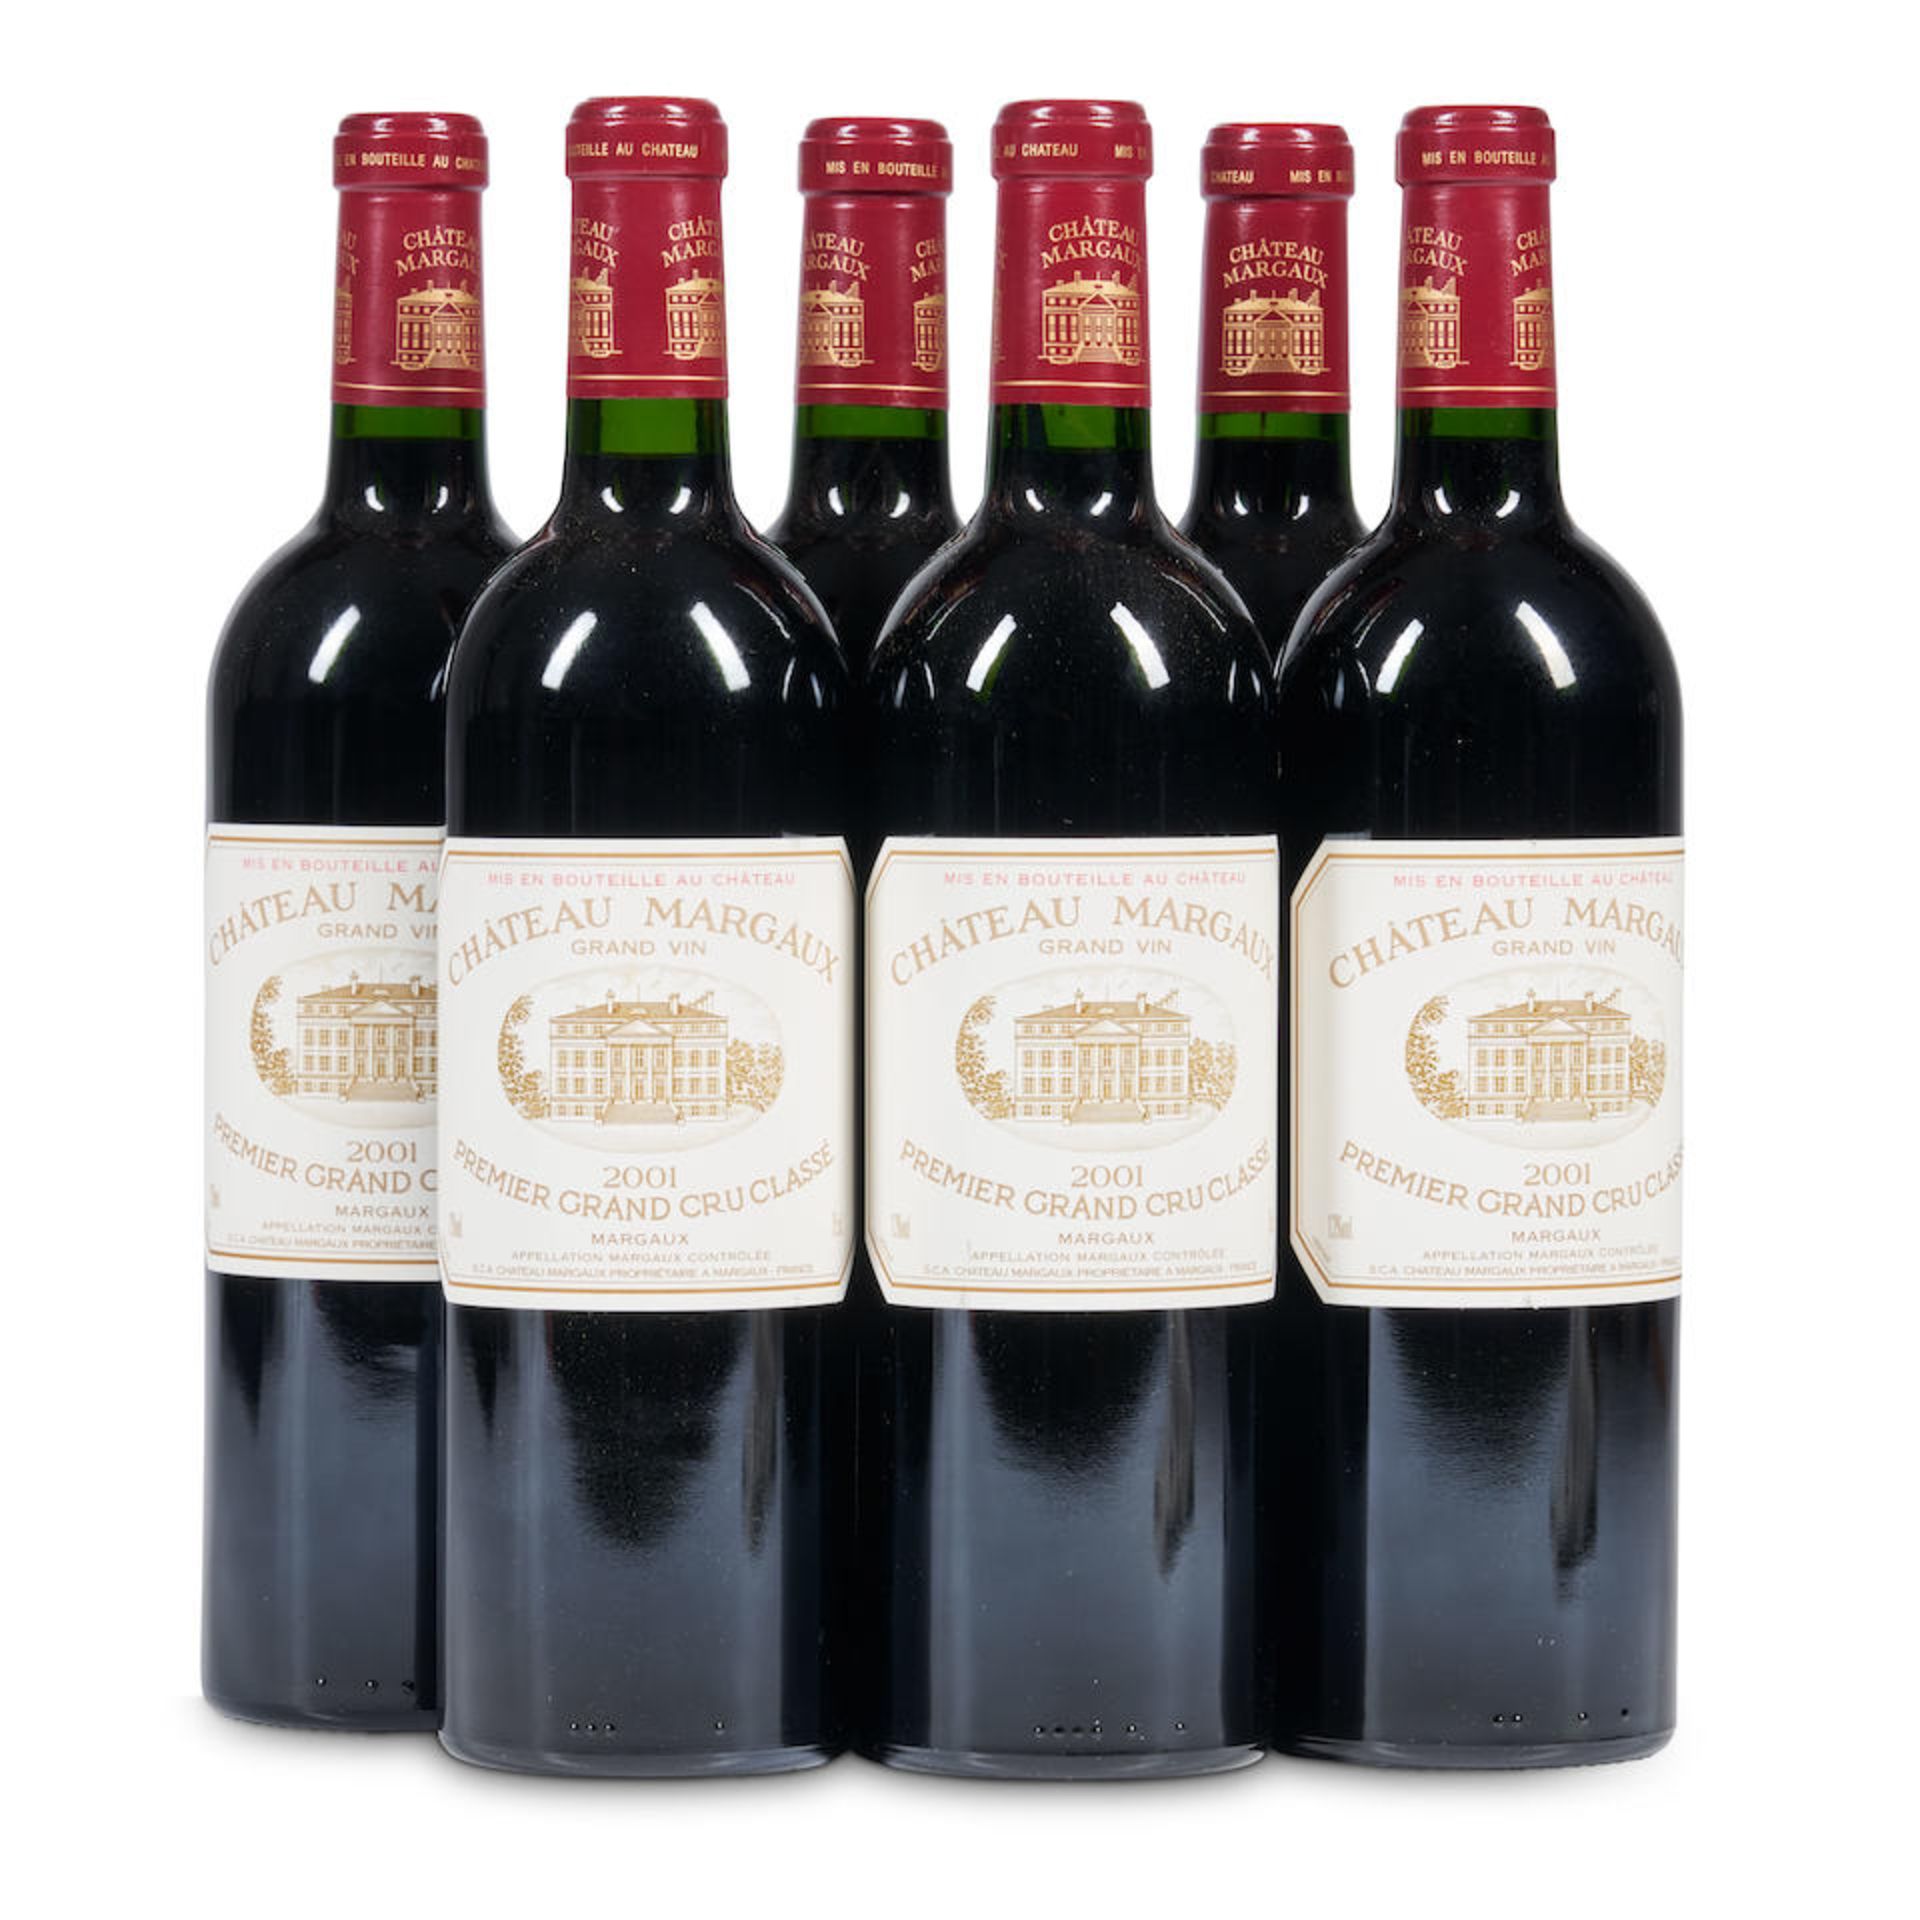 Chateau Margaux 2001 (6 bottles)